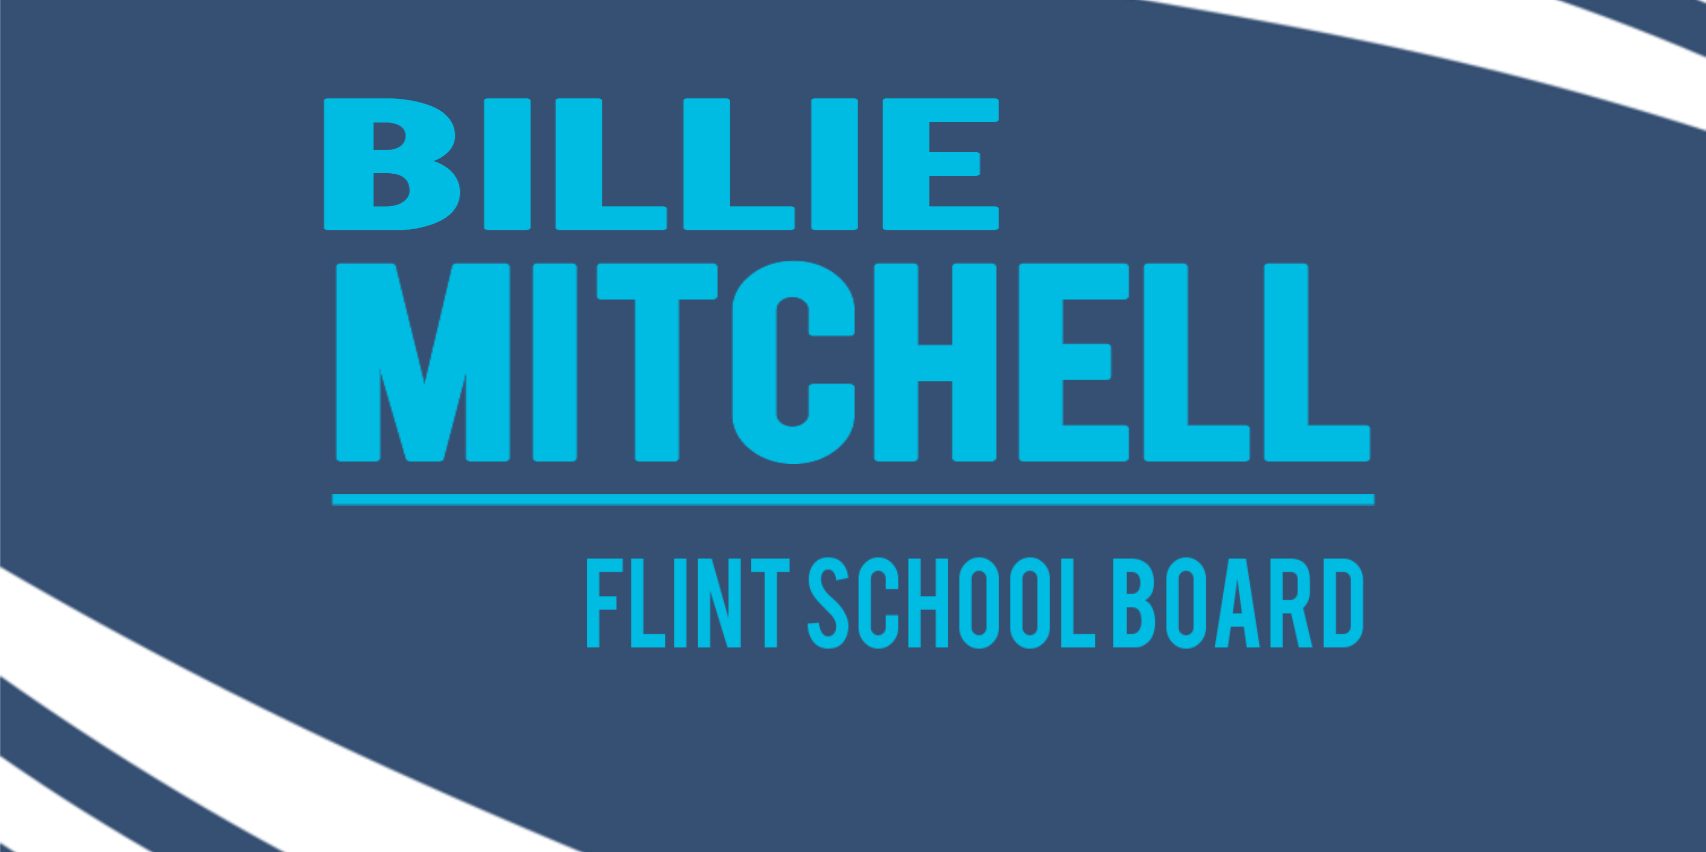 Billie Mitchell- 4x8 & 4x4 large signs